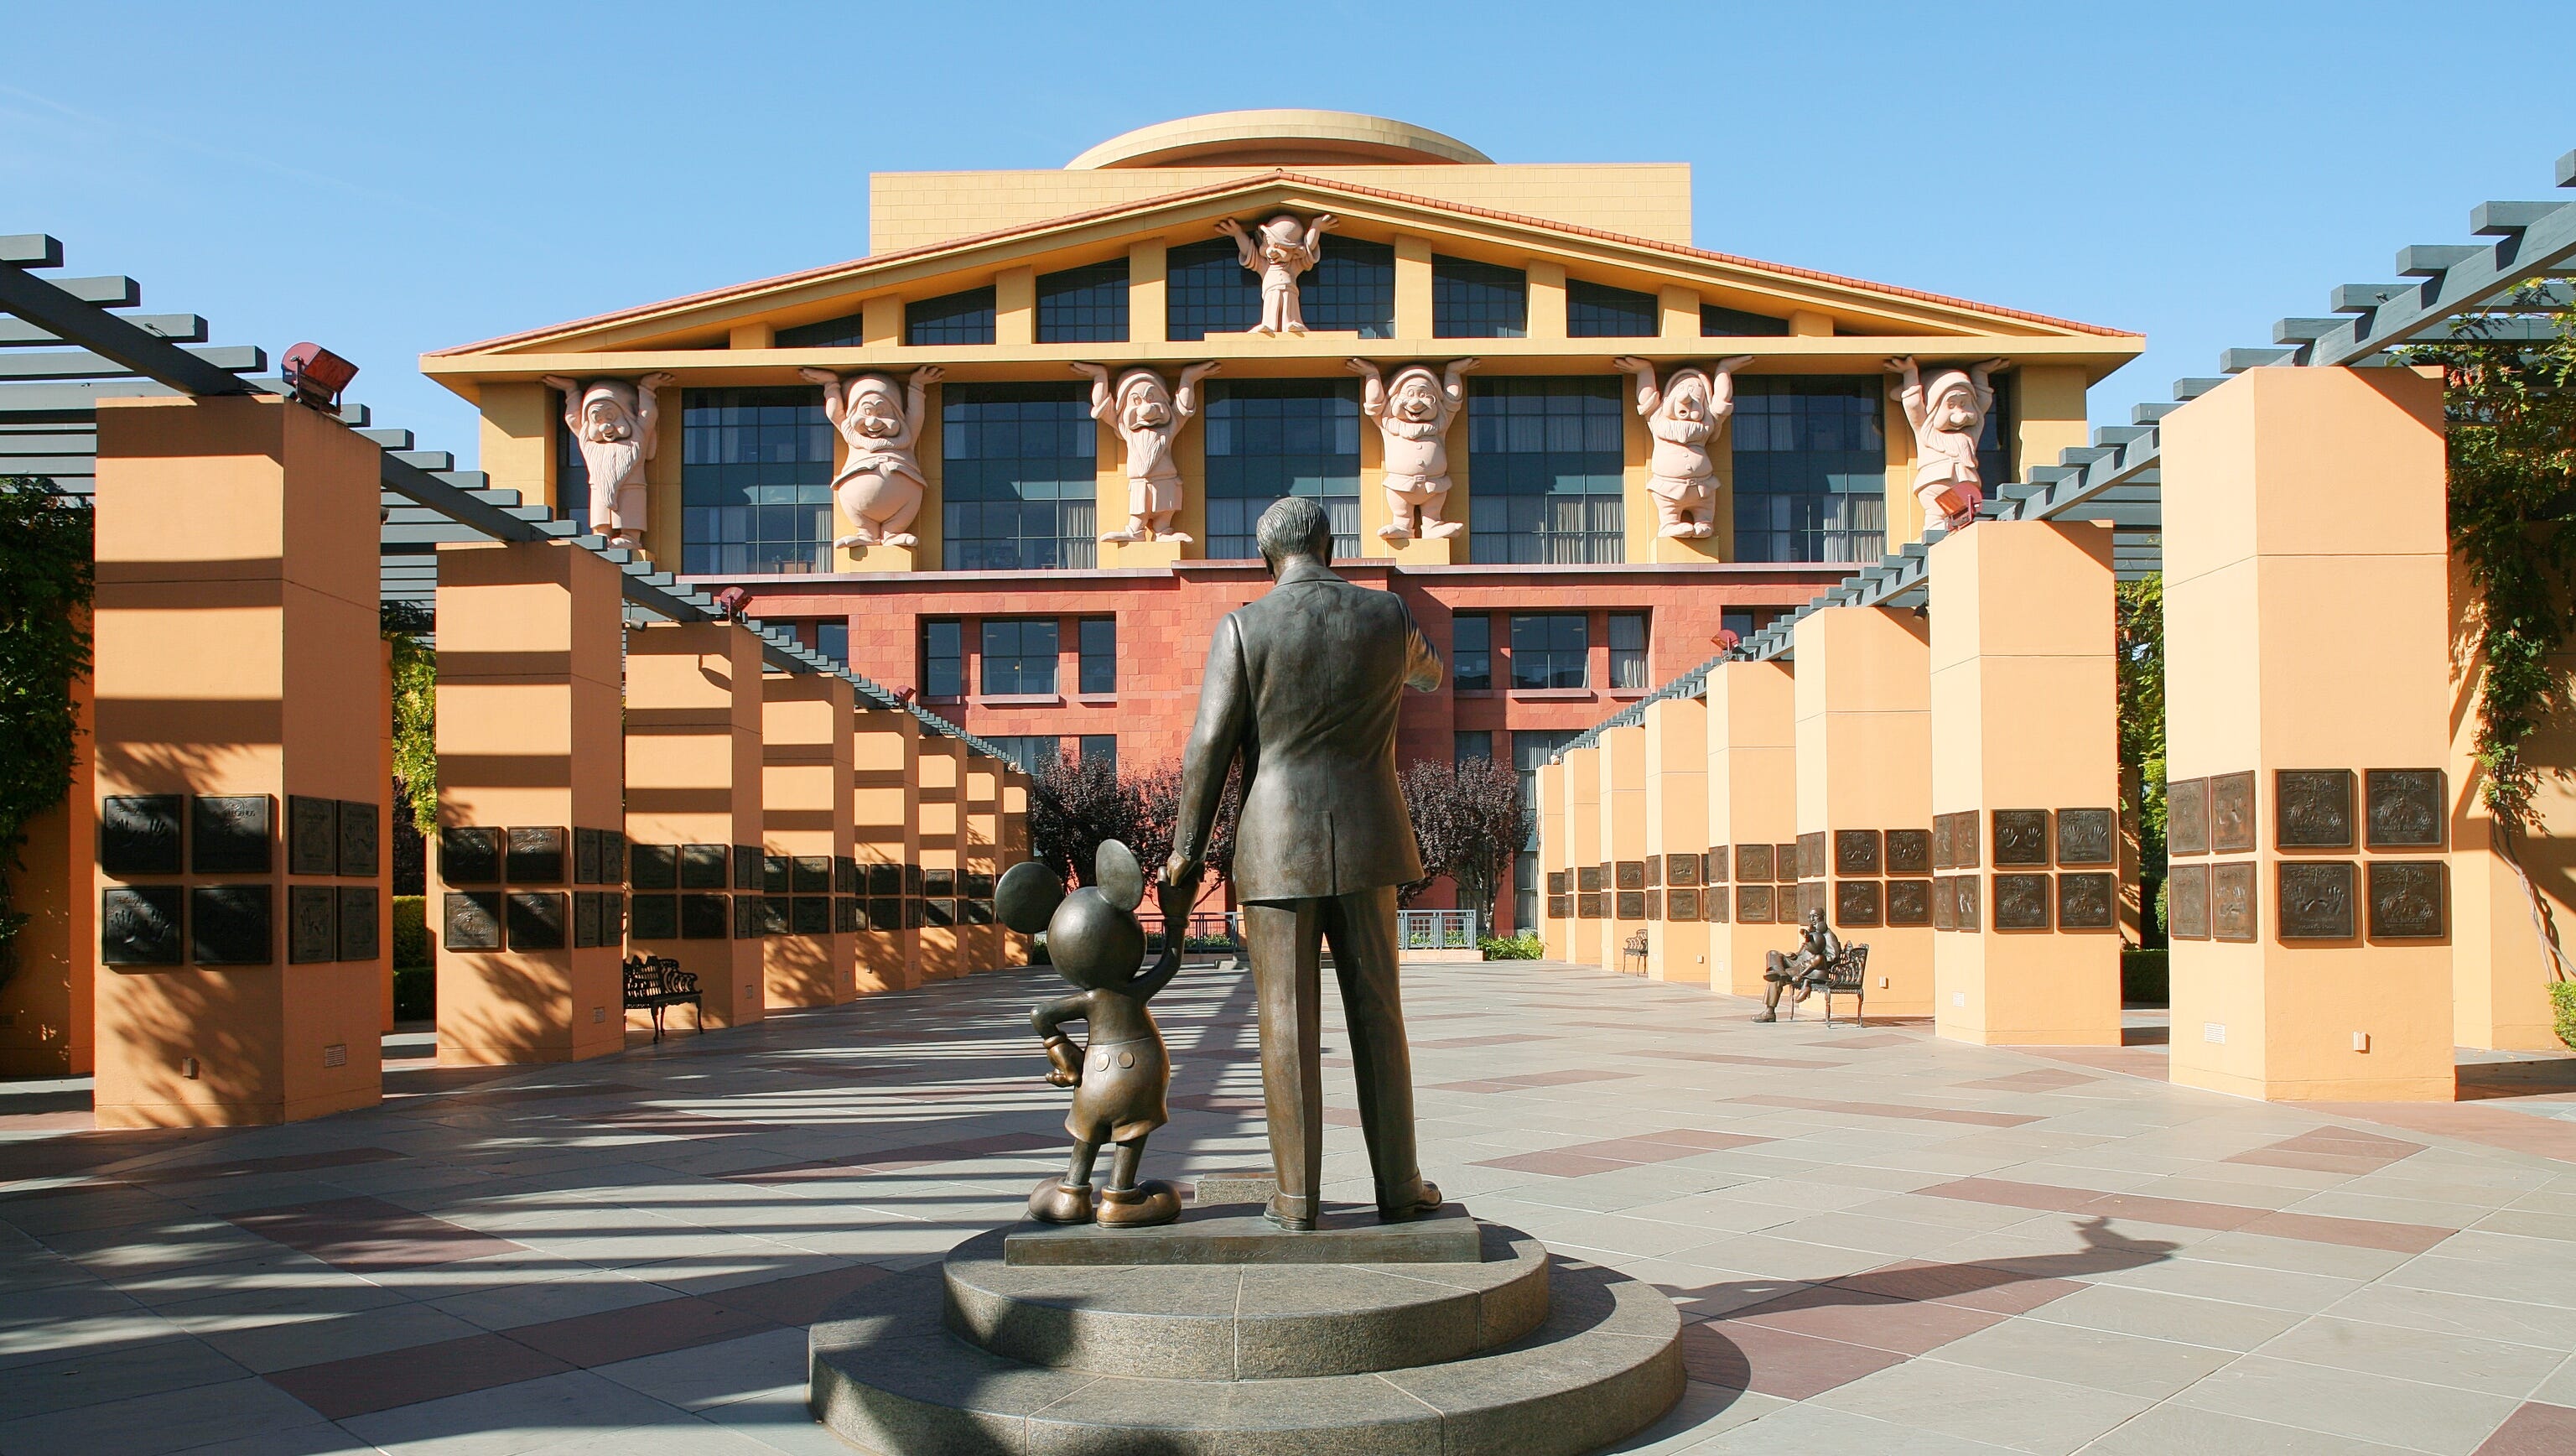 Walt Disney Studios: Take a tour of the working lot